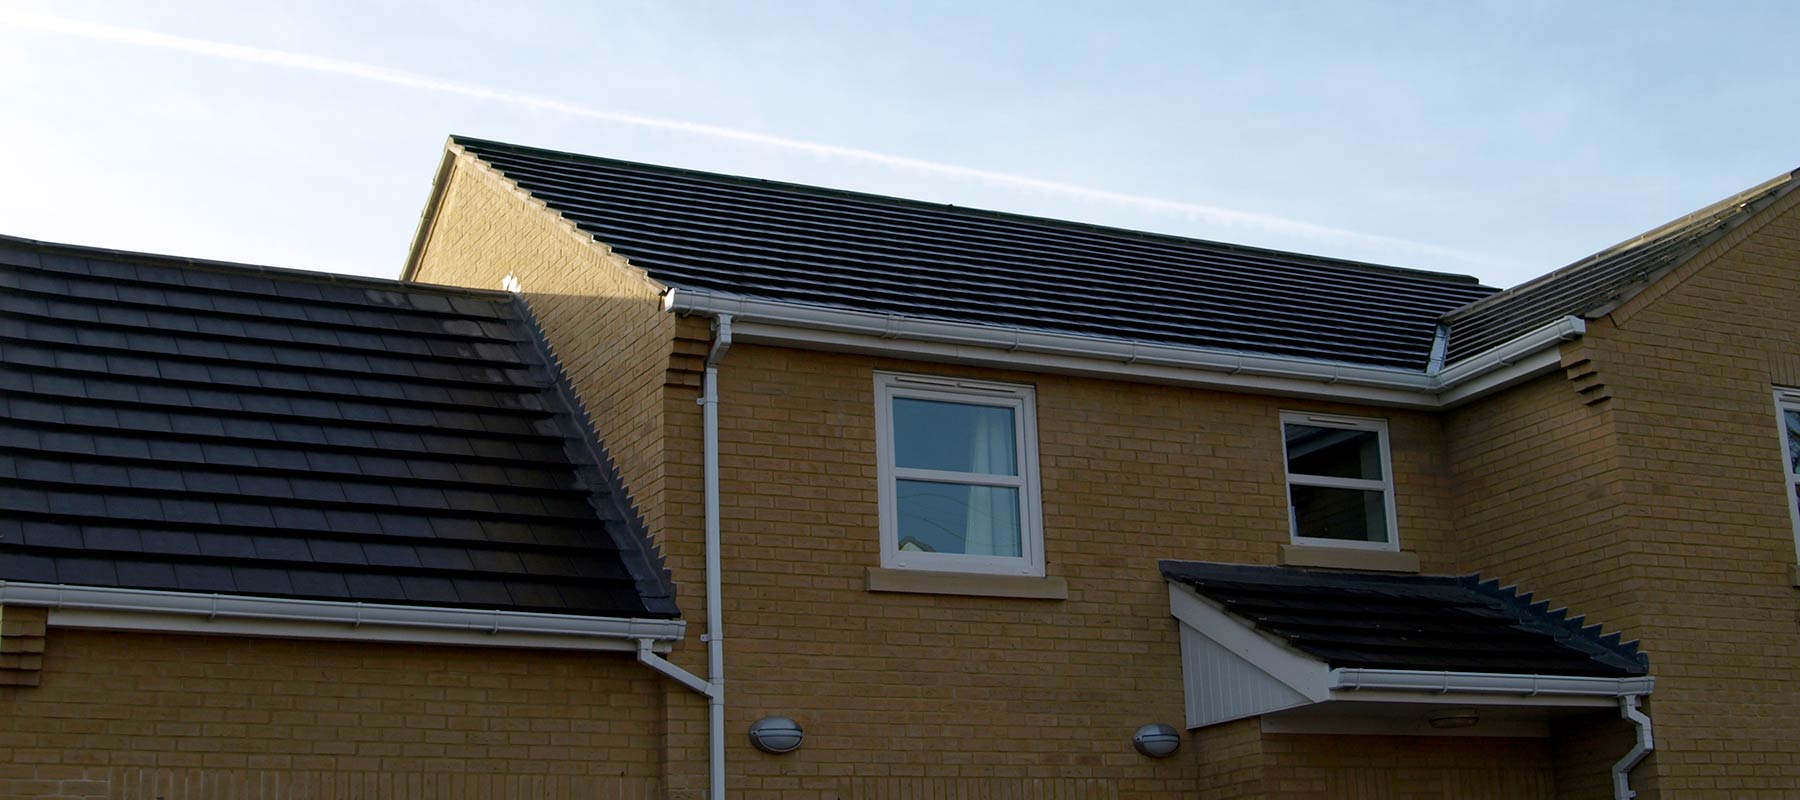 Paul Nunn Roofing Ltd-Tiling-Slating-Felt-Batten-Leadwork-Renovation-Repairs-Ipswich-Newmarket-Cambridge